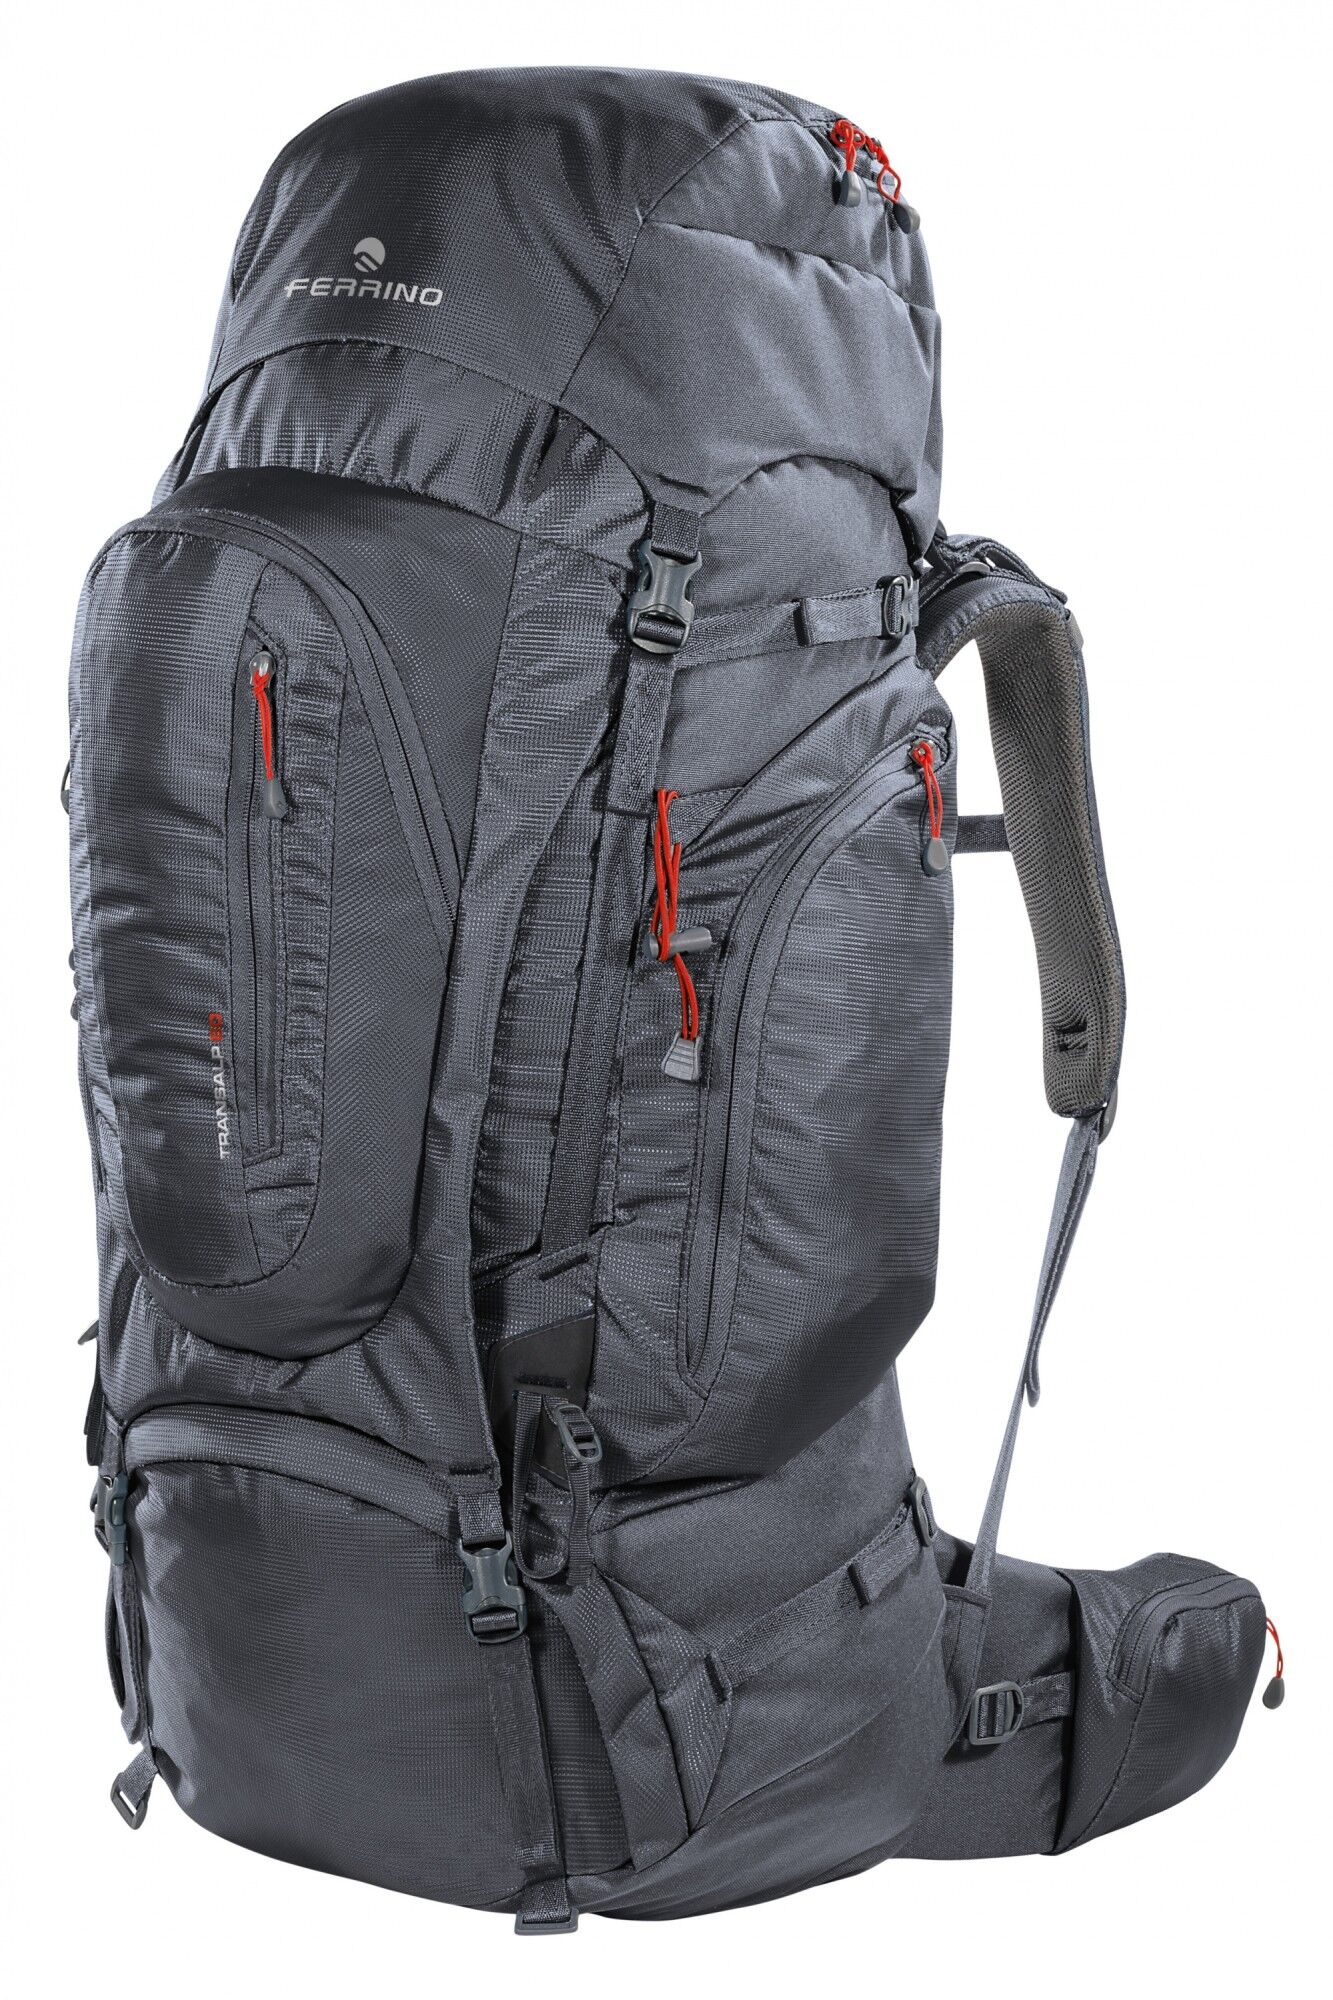 Ferrino Transalp 60 - Hiking backpack